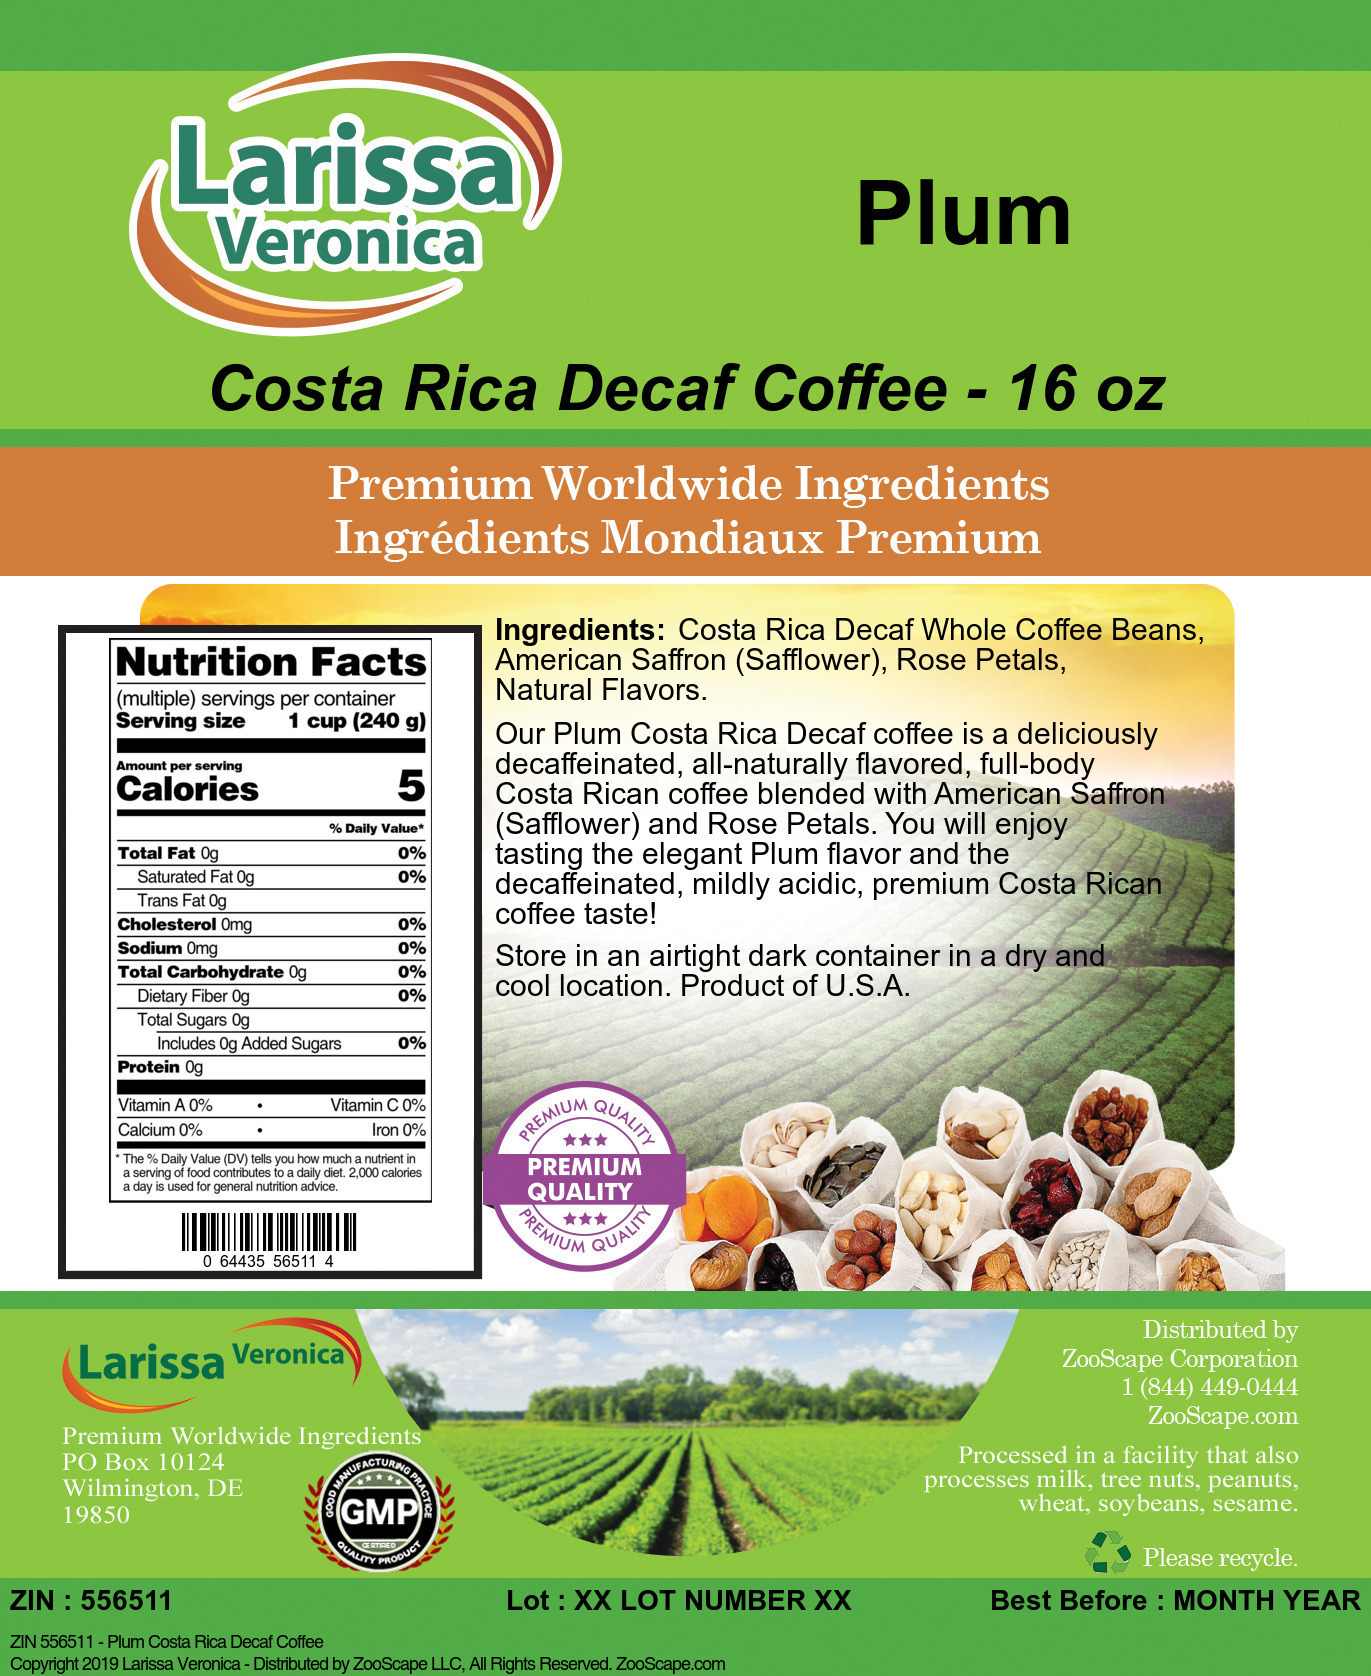 Plum Costa Rica Decaf Coffee - Label